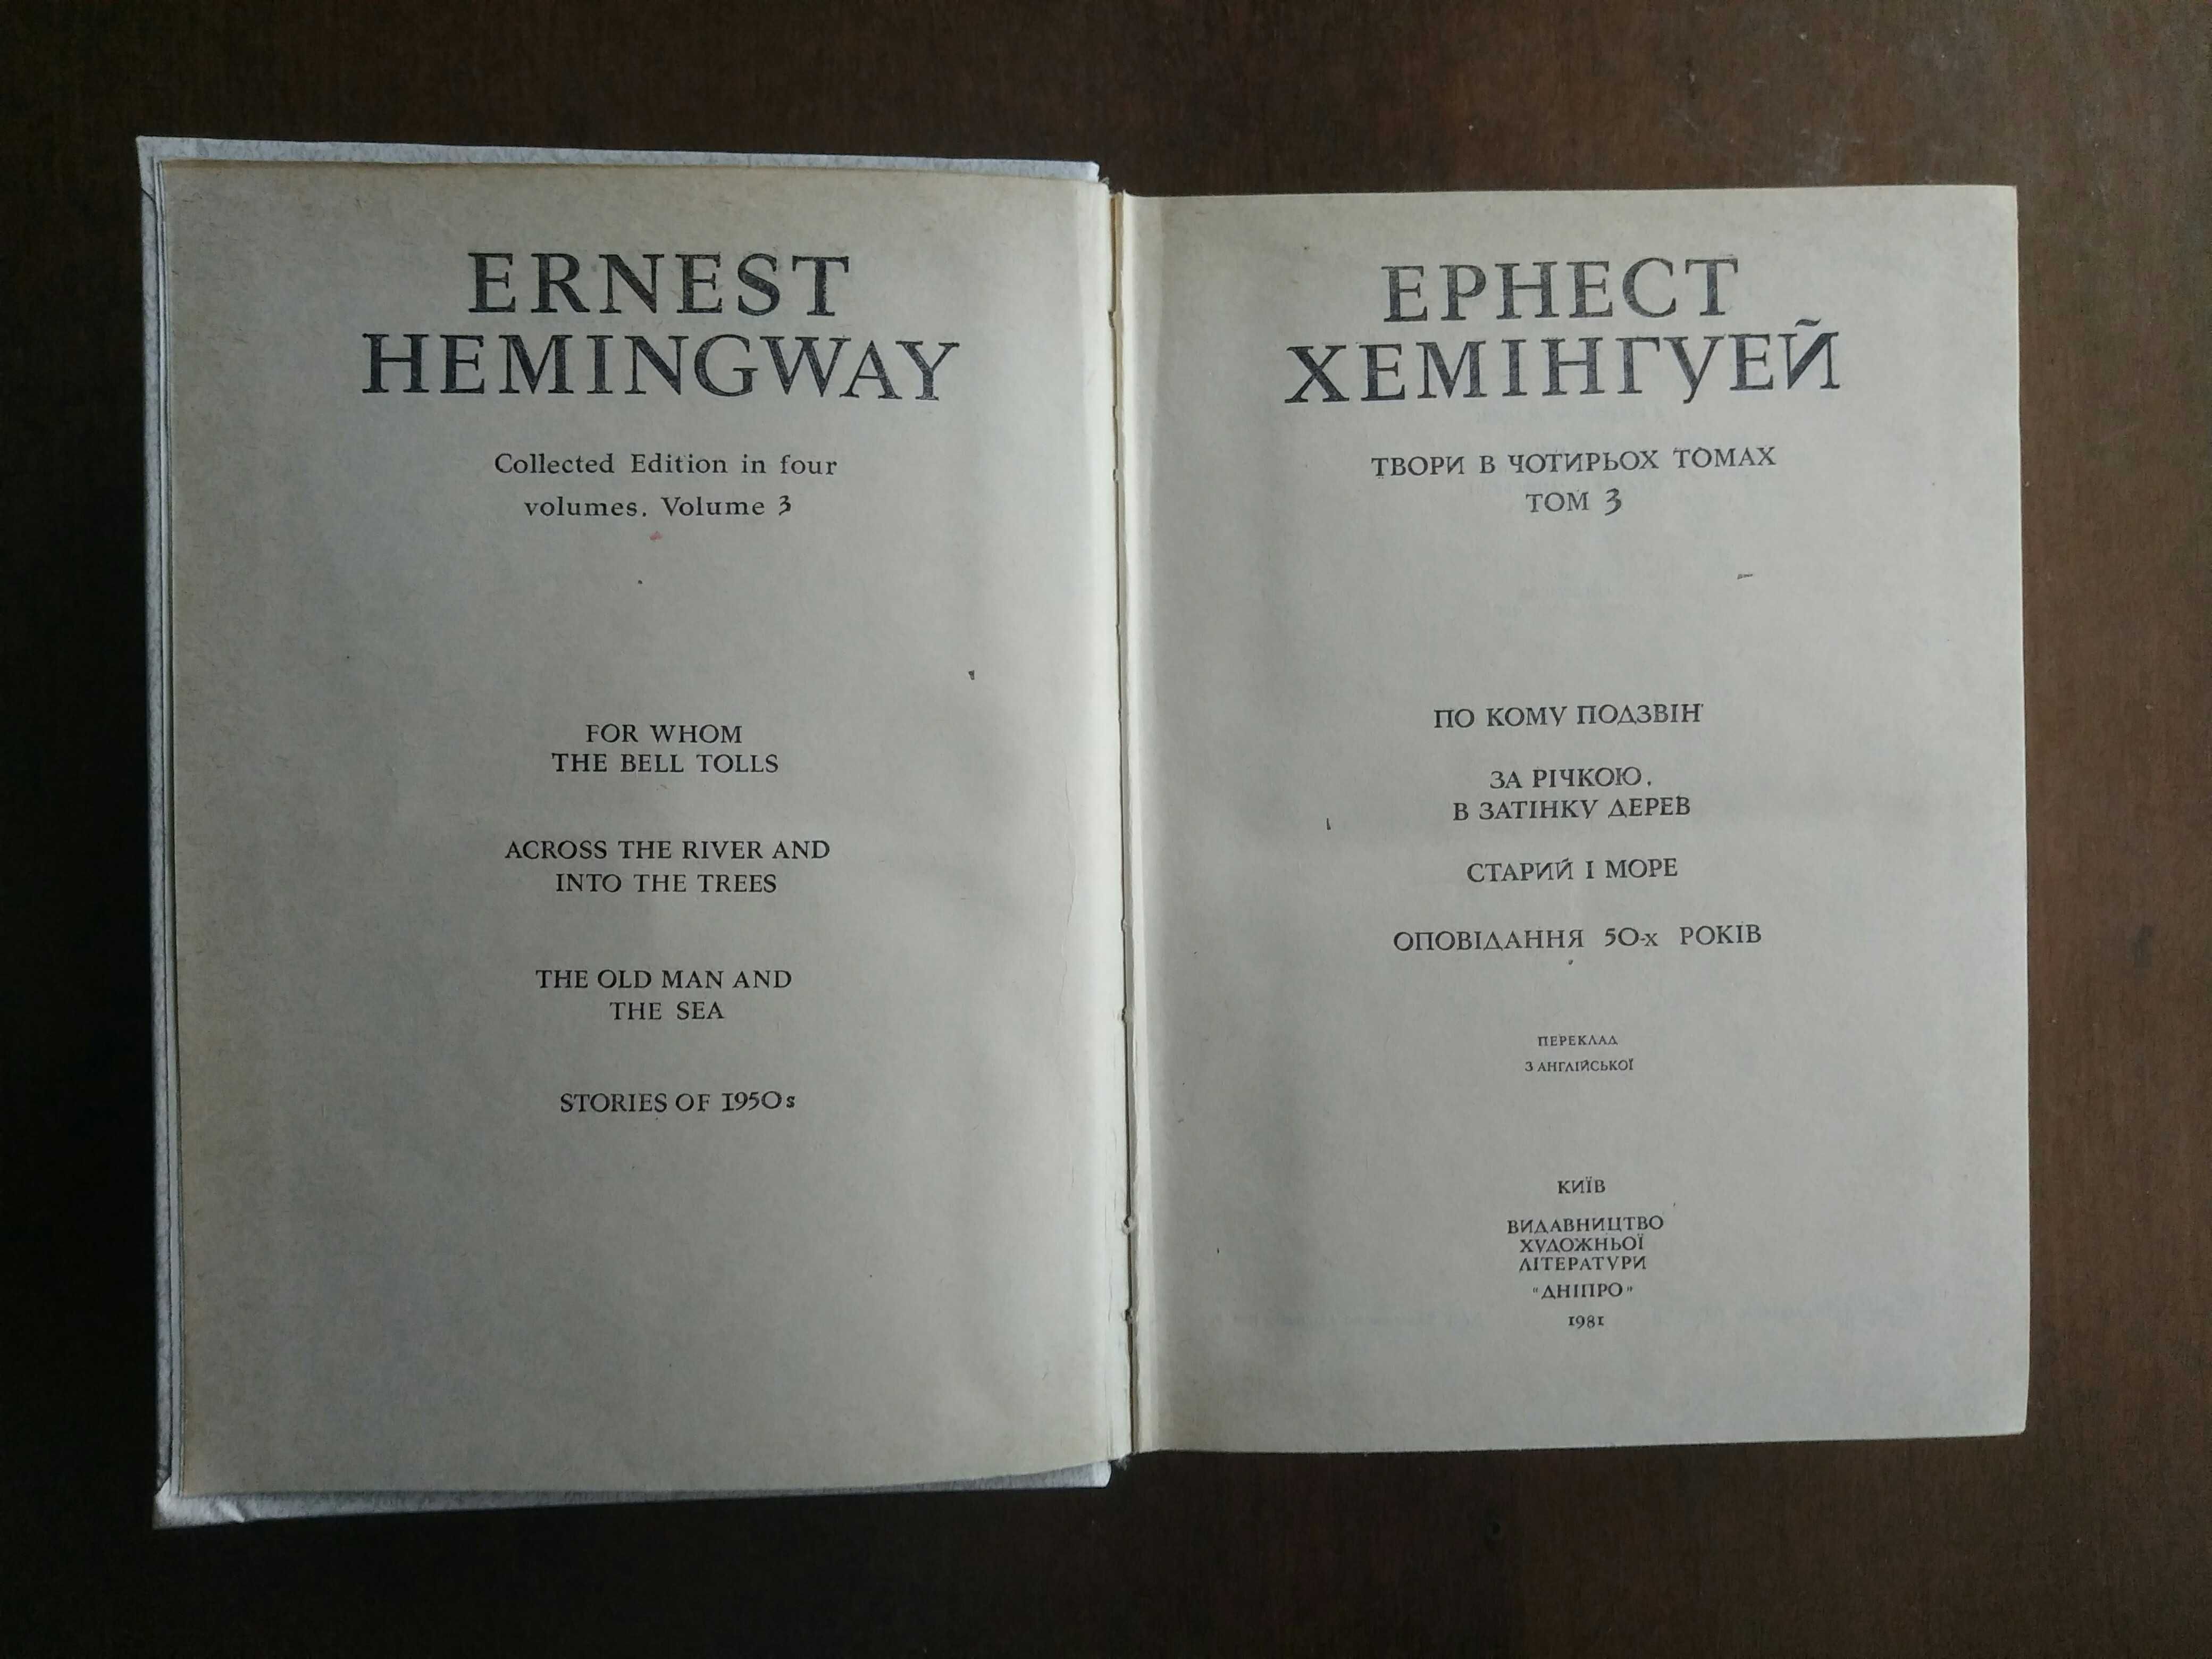 Ернест Хемінгуей. Твори в чотирьох томах. 1979-81 рр.